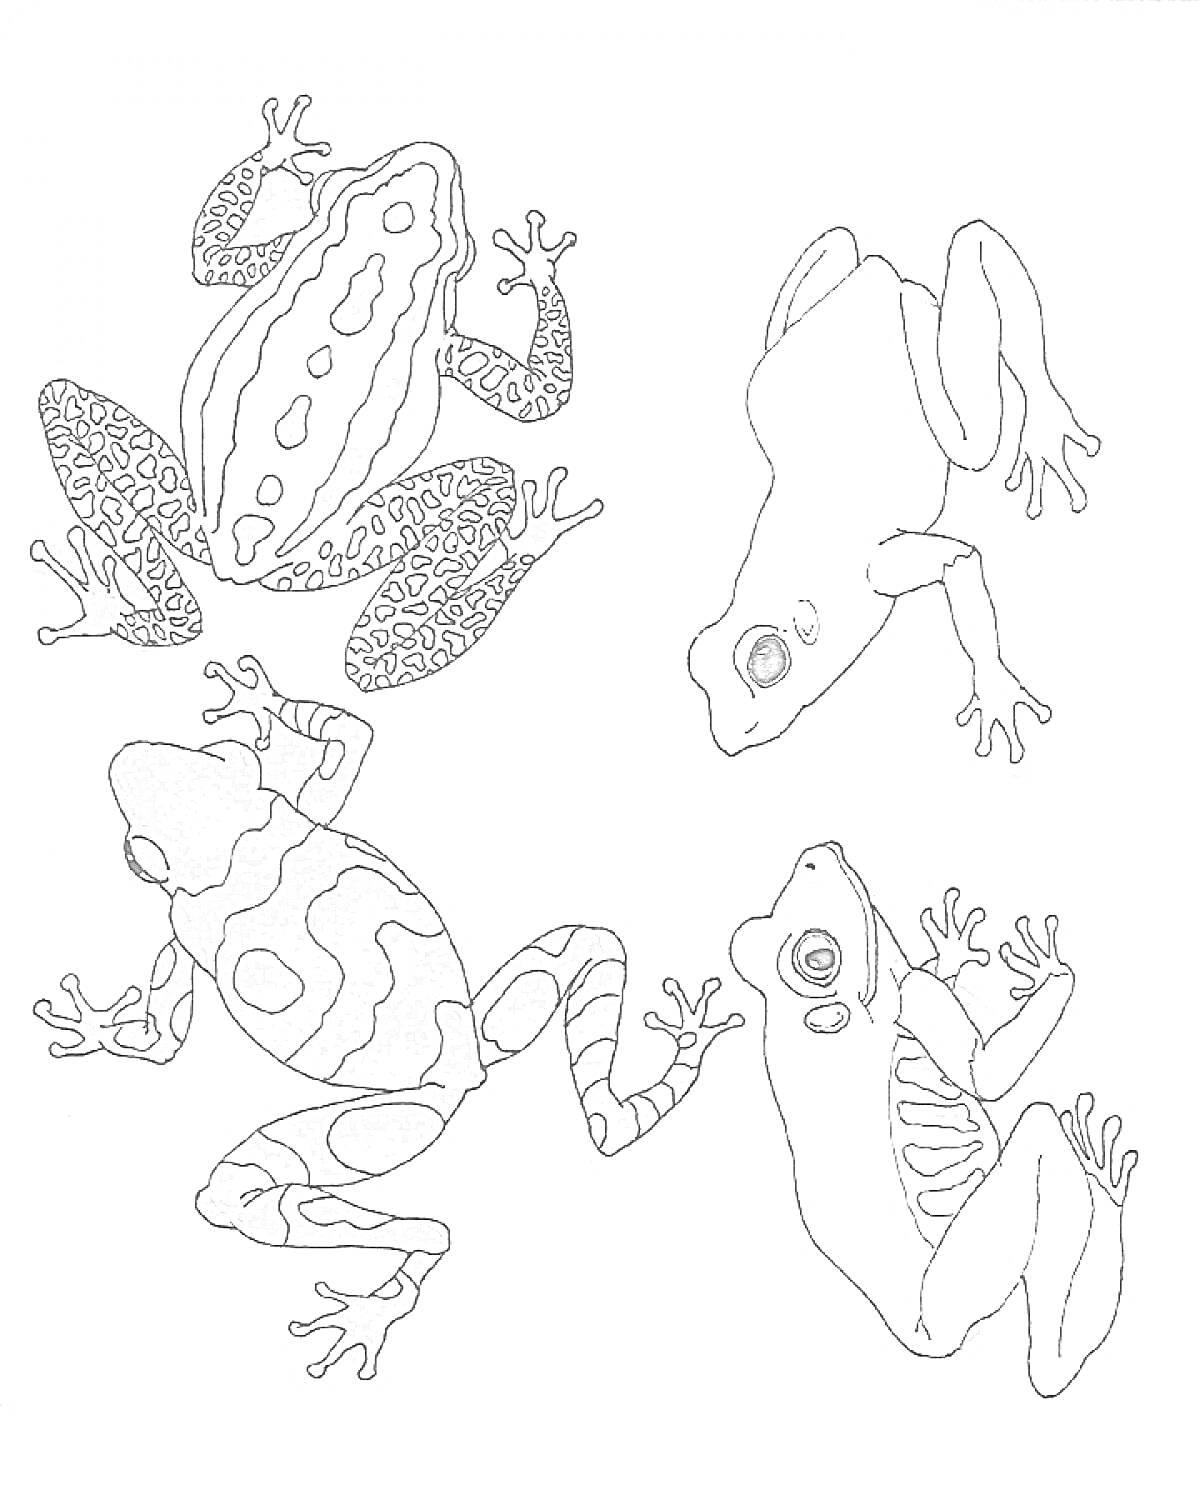 Четыре лягушки с разным узором на теле